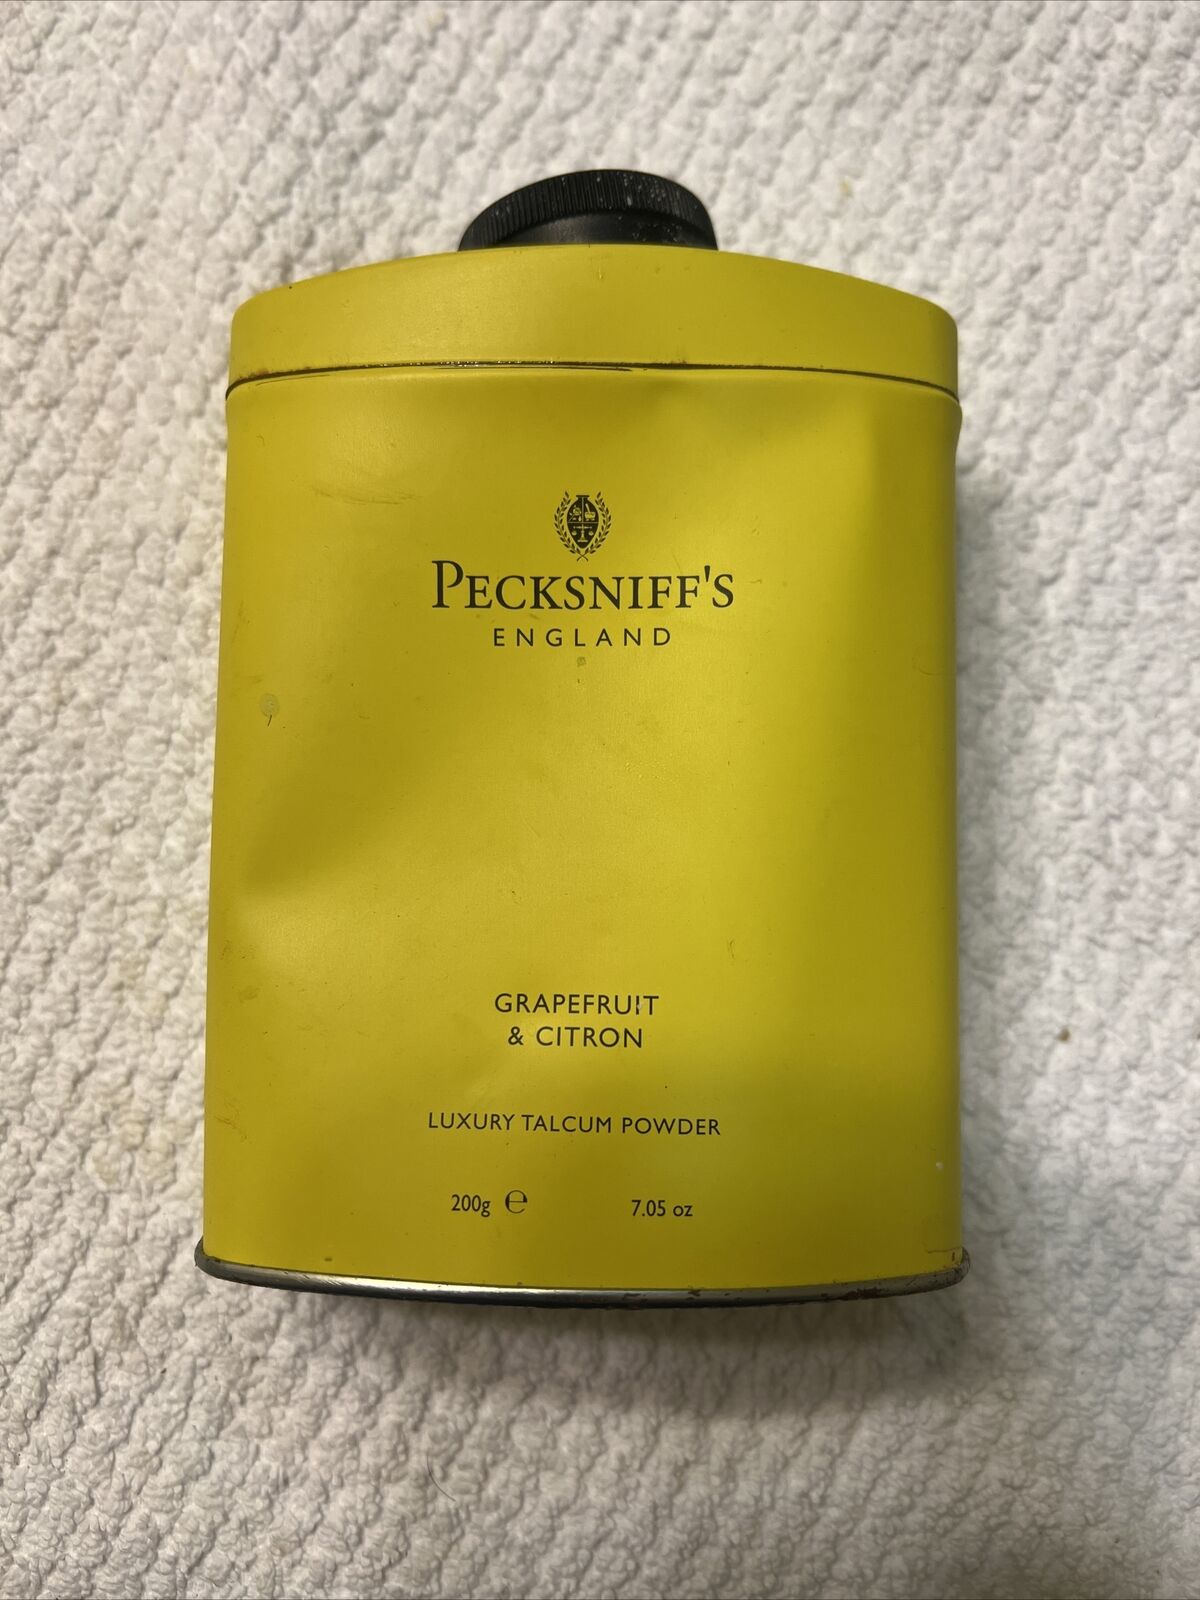 Pecksniff's England Grapefruit & Citron Luxury Talcum Powder Full Dented